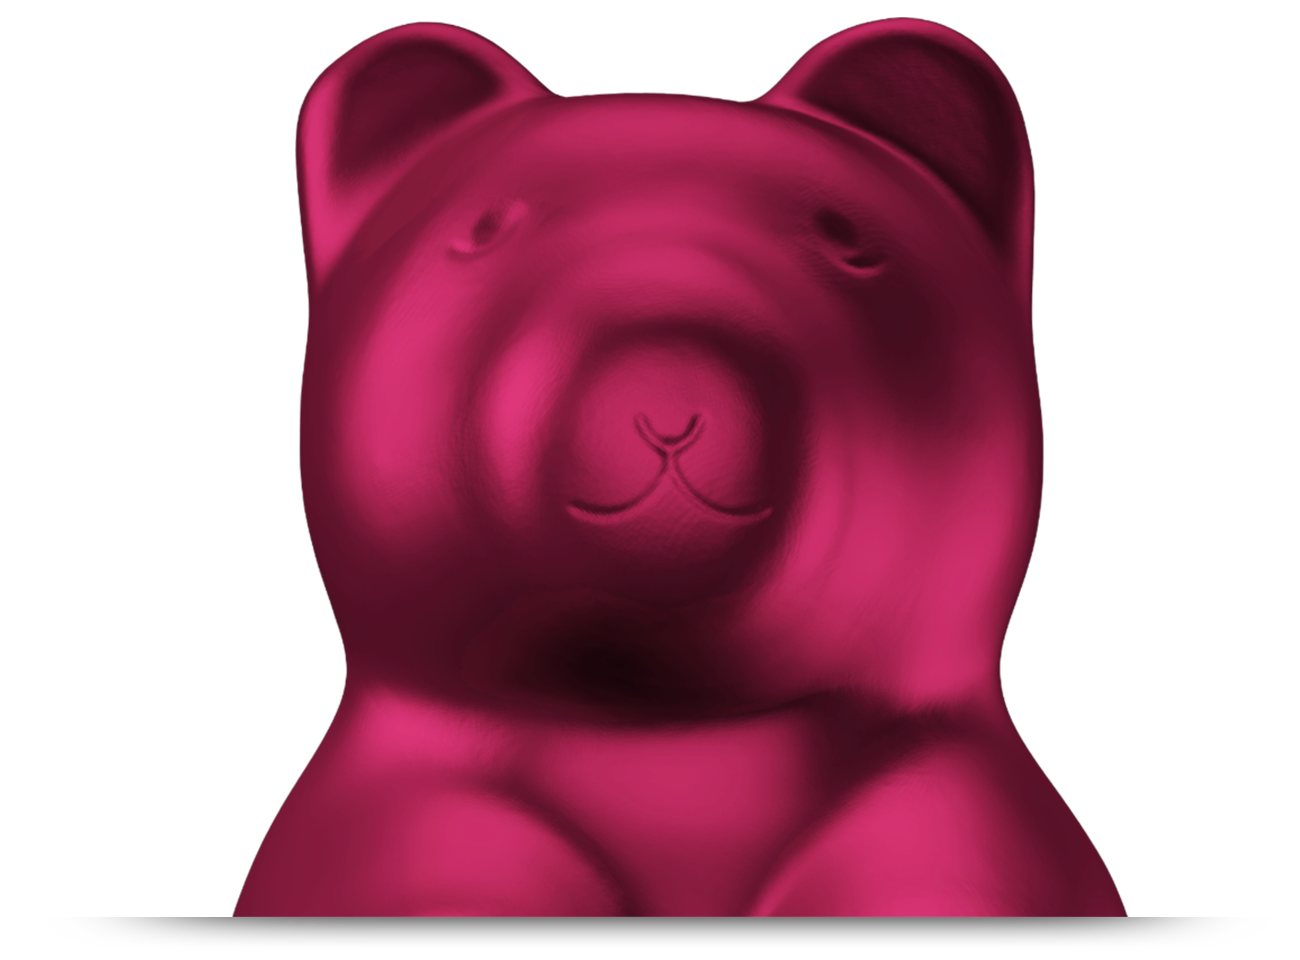 Kunststoff bären figur Kunst wien jelly bear jellypoolbear lumi Bär Plastik Figur Manuel Stepan nft wien nft artist